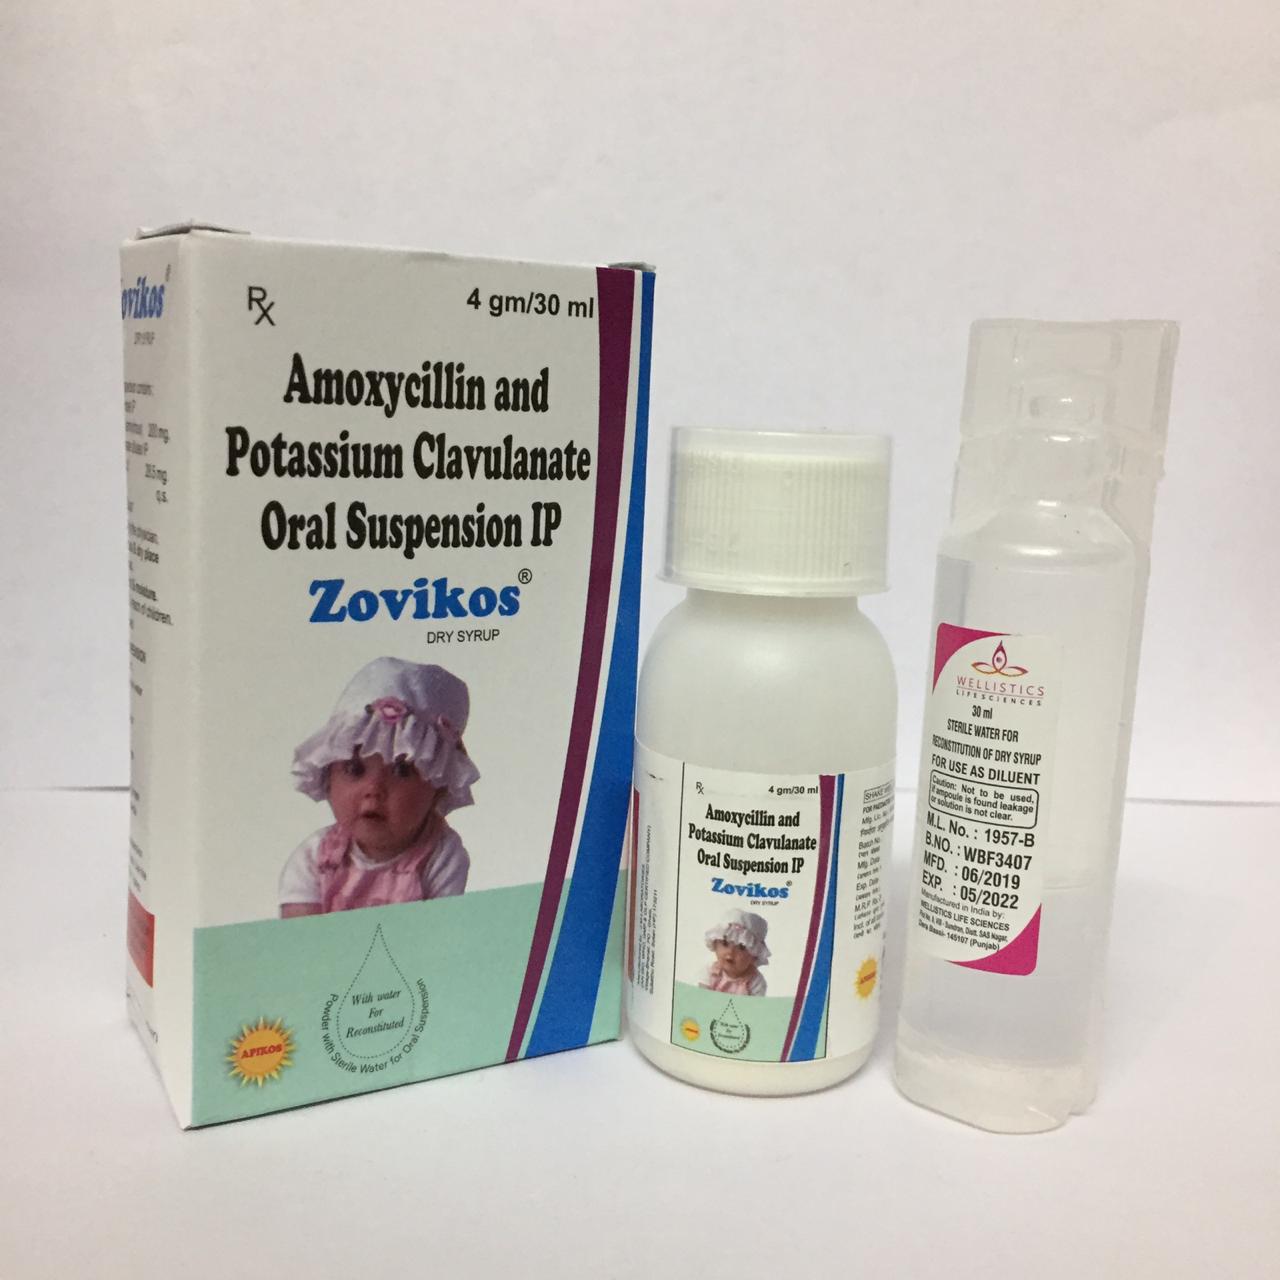 Product Name: ZOVIKOS, Compositions of ZOVIKOS are Amoxycillin and Potassium Clavulanate Oral Suspension IP - Apikos Pharma